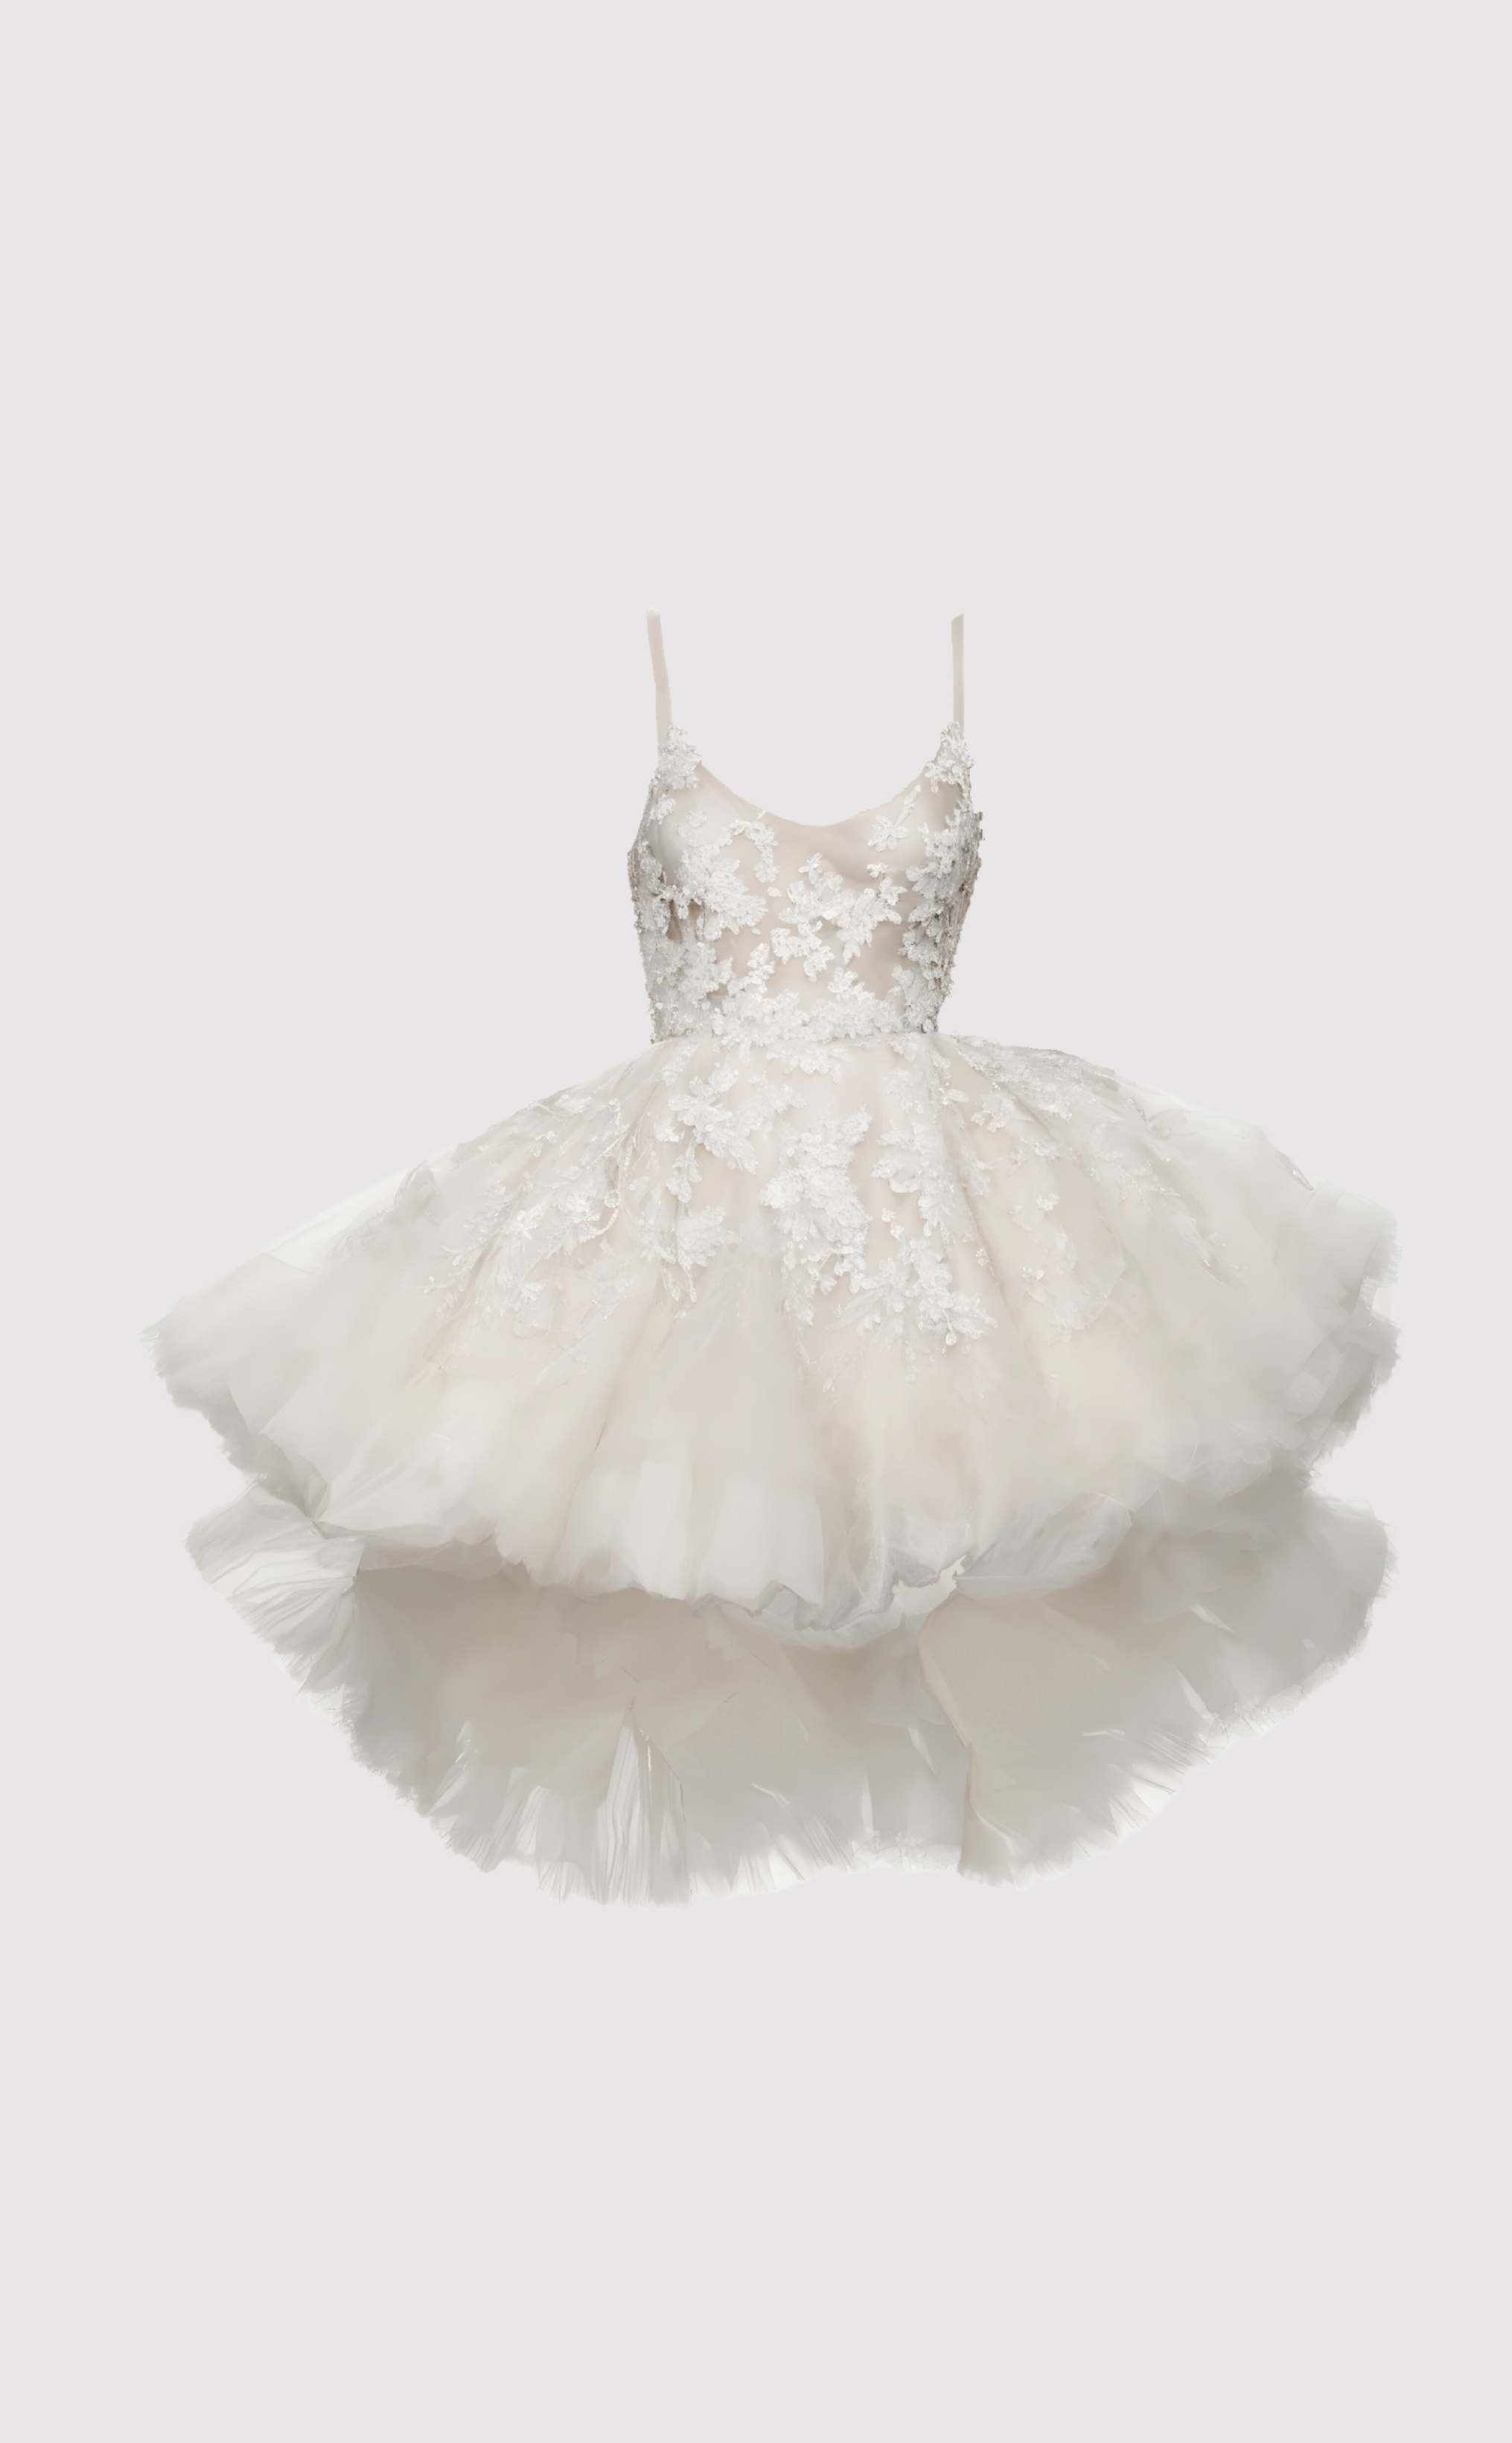 Bridal tulle dress